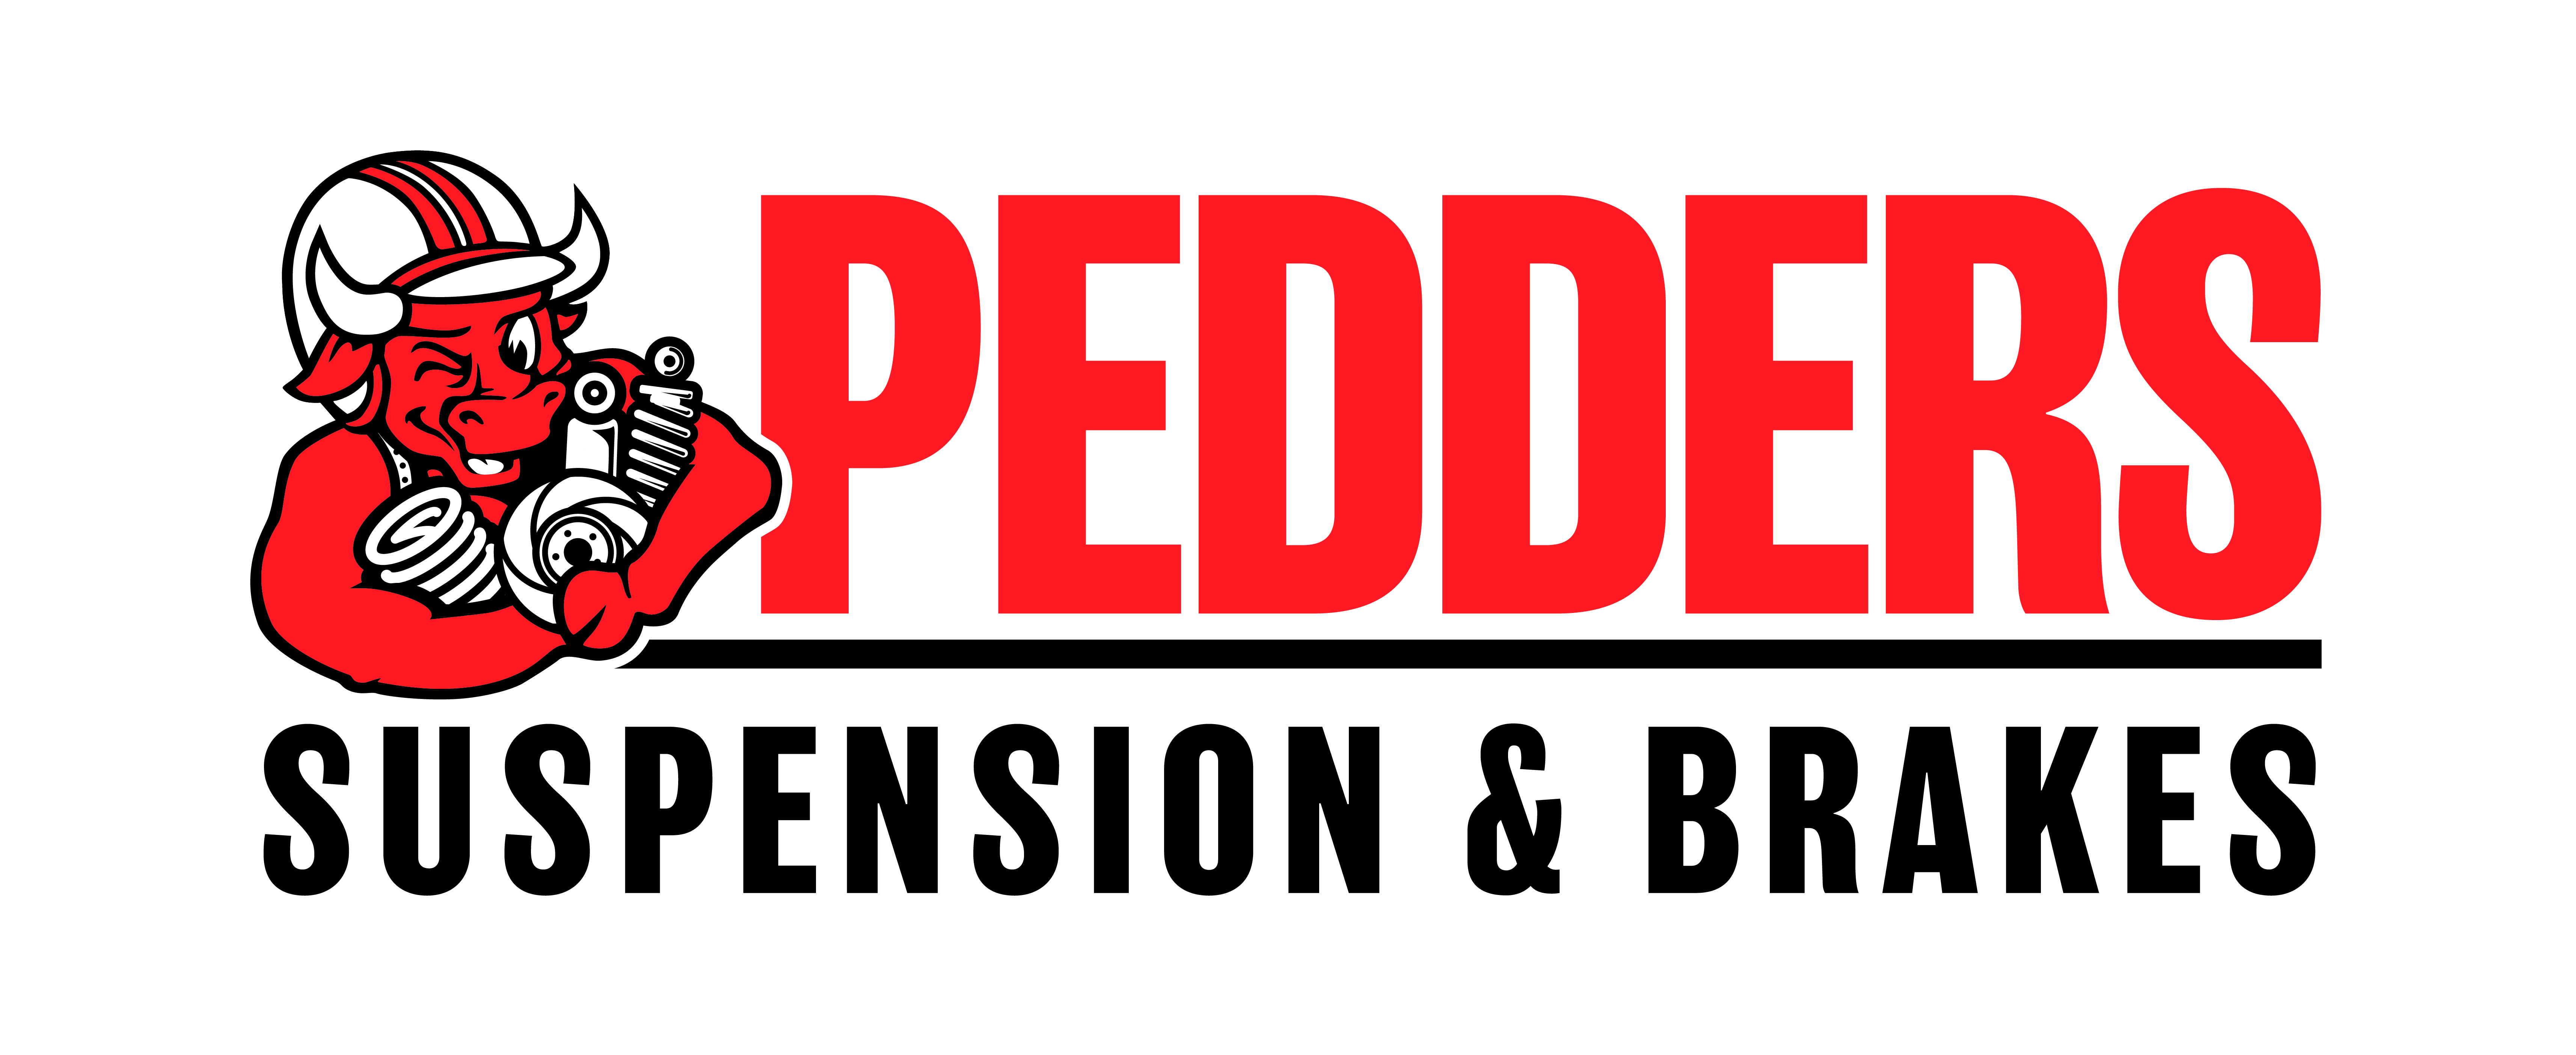 Pedders новый логотип